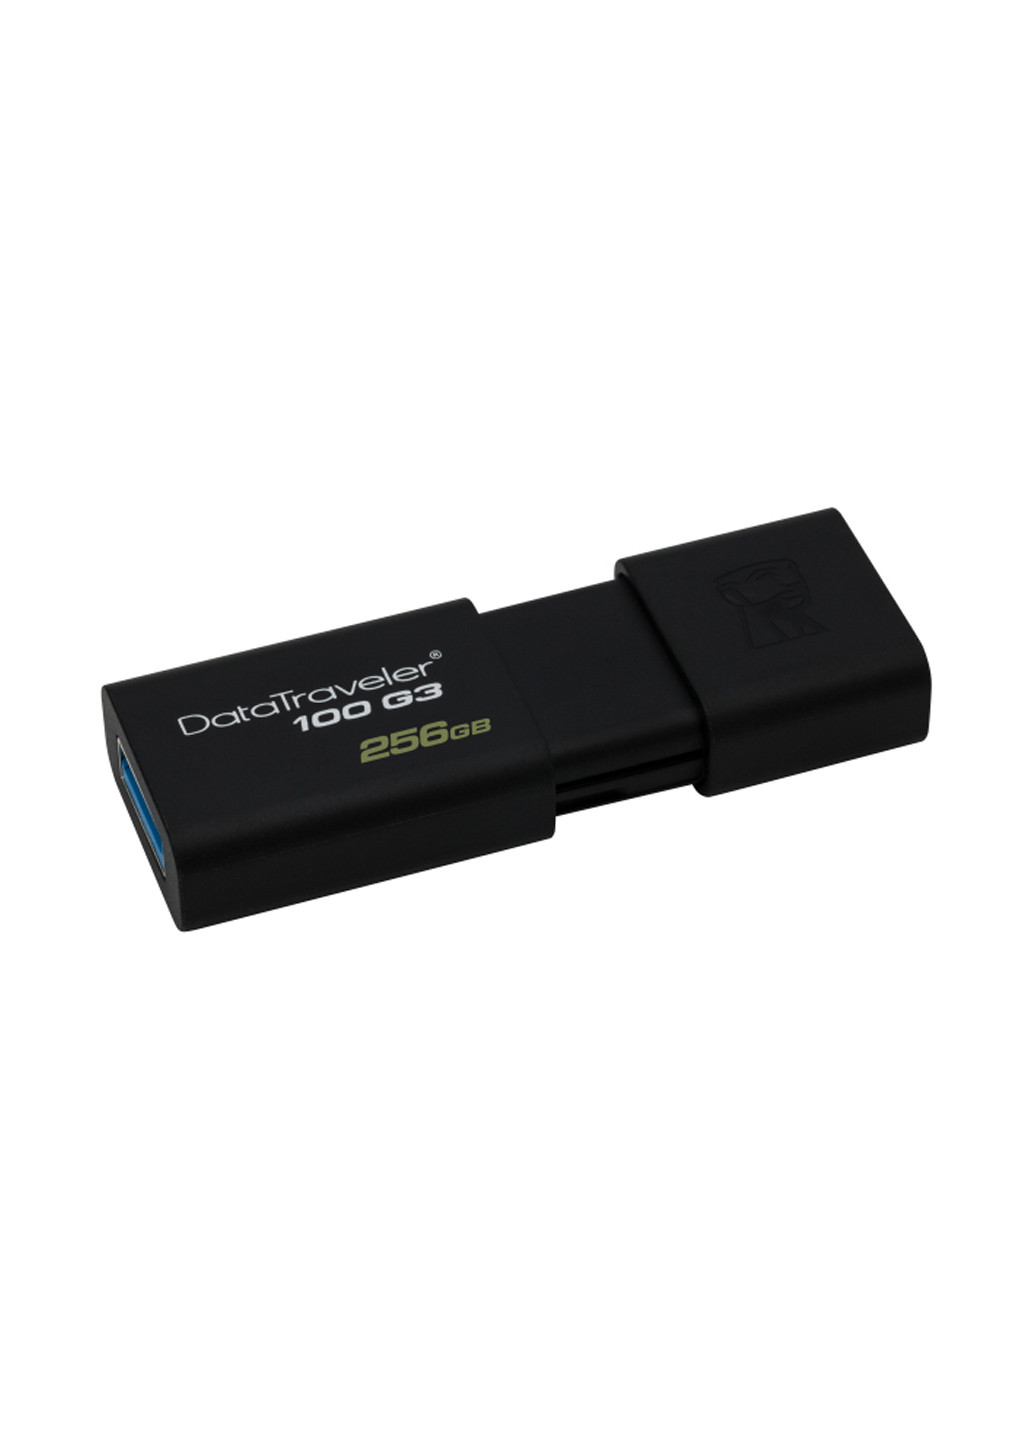 Флеш пам'ять USB DataTraveler 100 G3 256GB USB 3.0 (DT100G3 / 256GB) Kingston флеш память usb kingston datatraveler 100 g3 256gb usb 3.0 (dt100g3/256gb) (136742825)